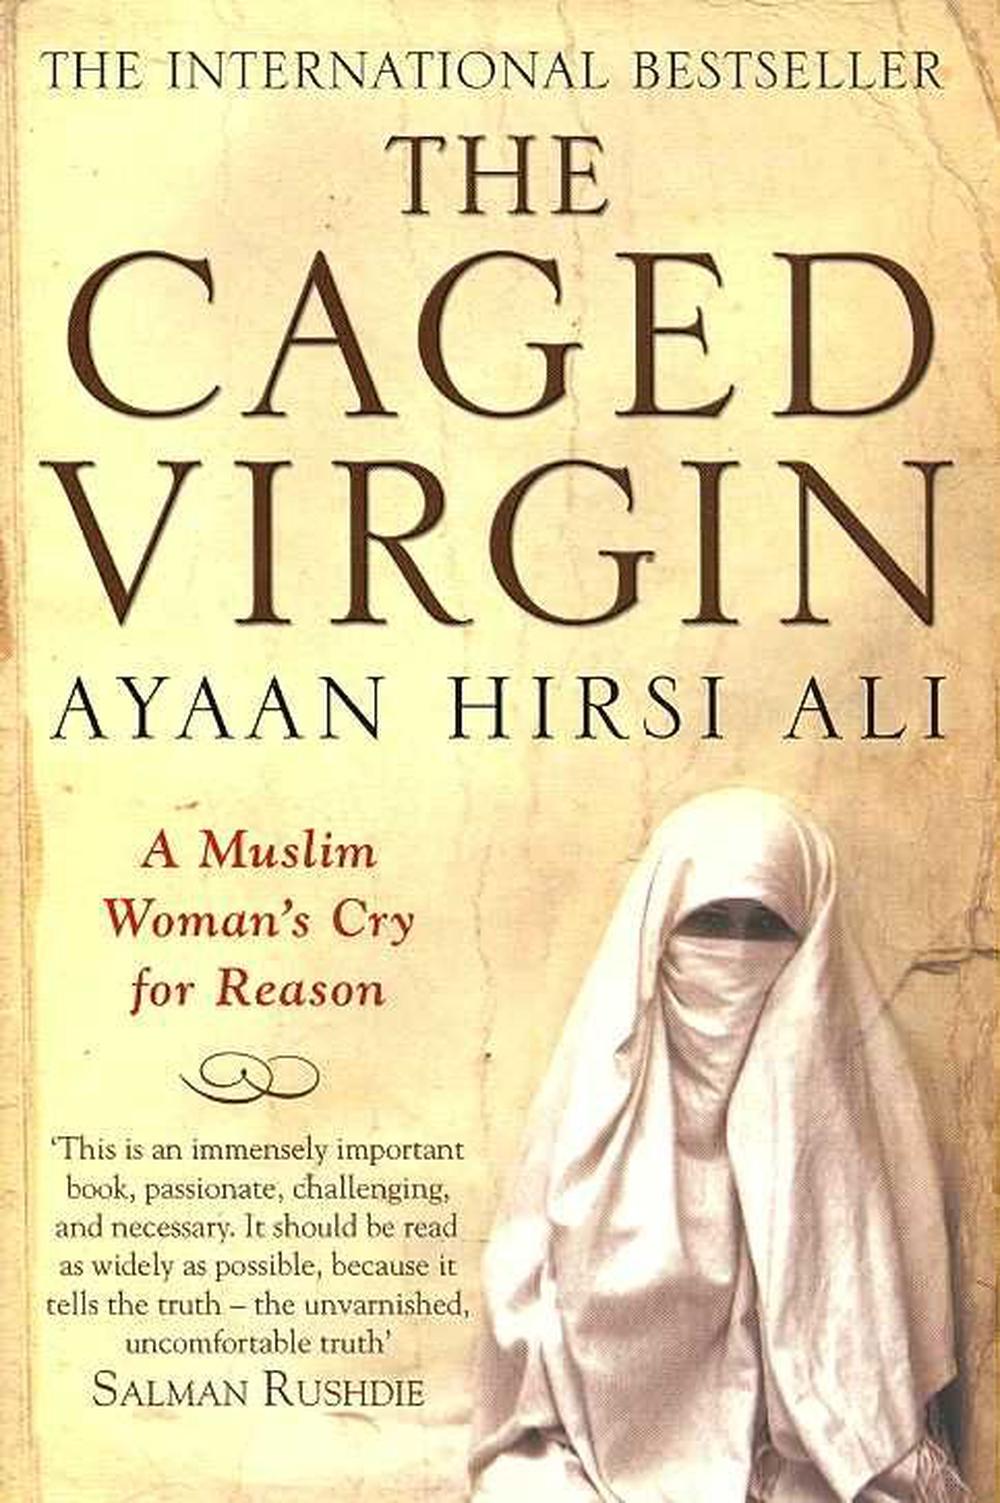 The Caged Virgin by Ayaan Hirsi Ali